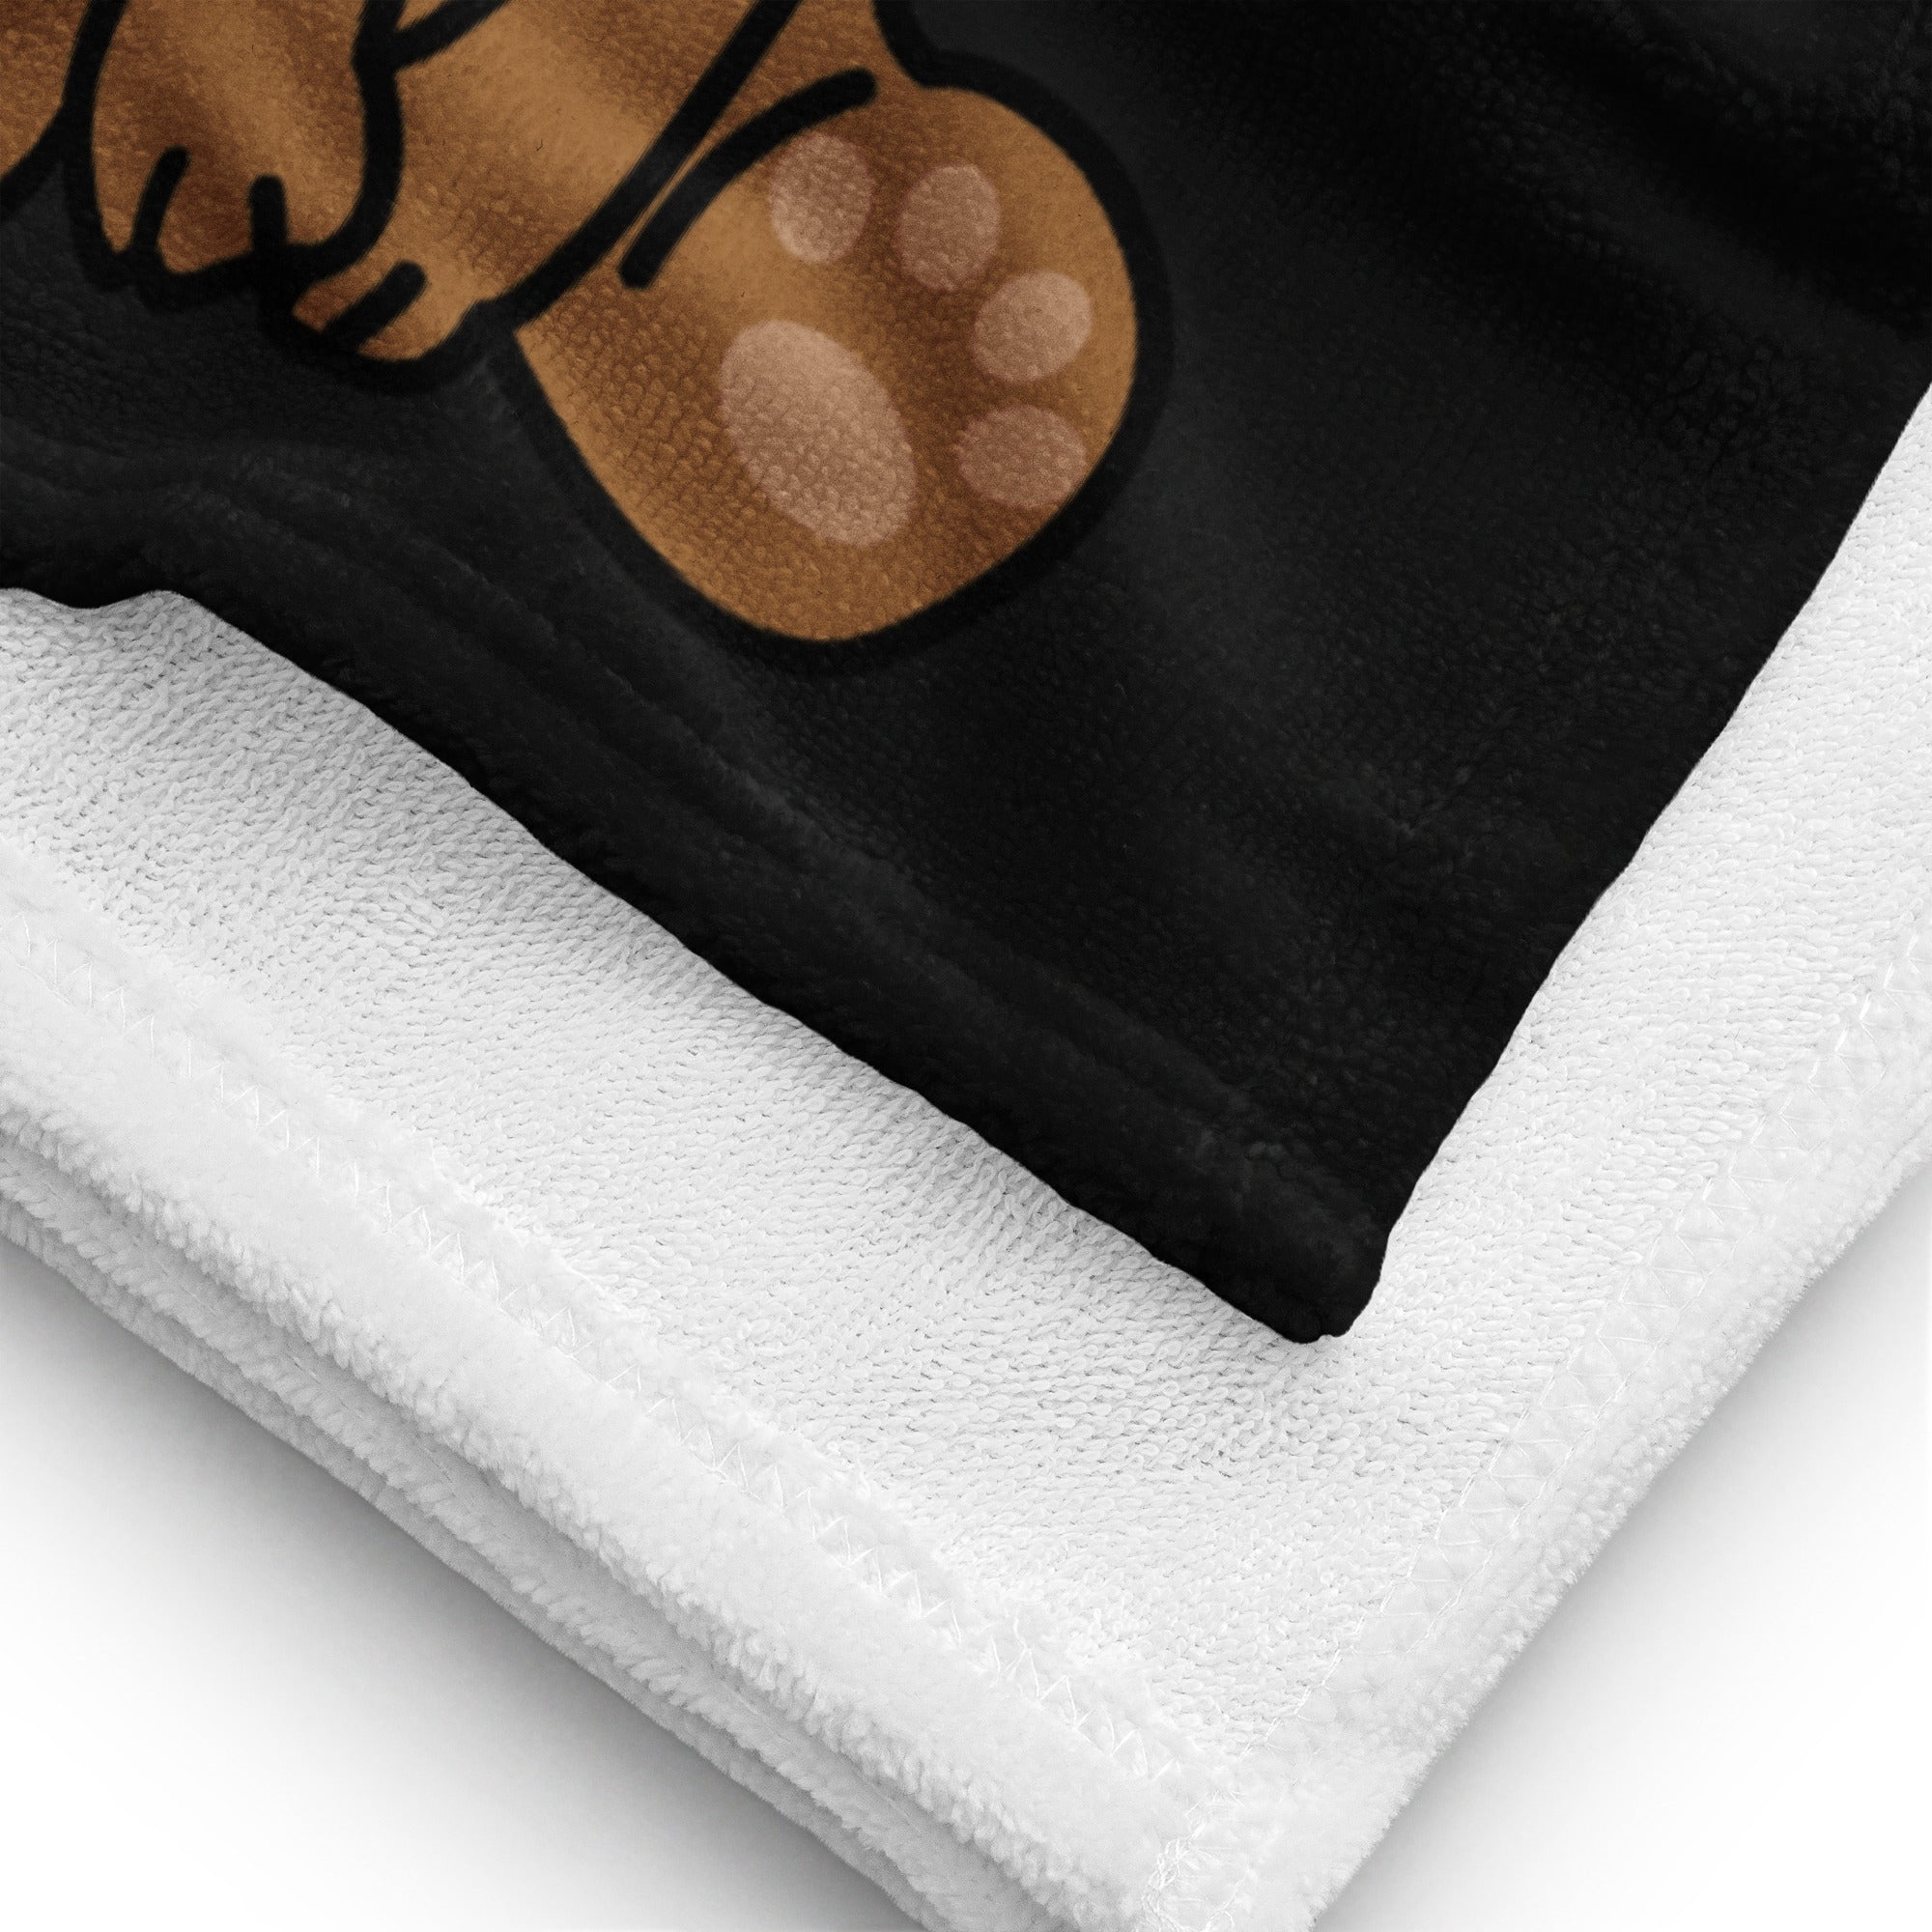 I am a PuppyBear / Bath Towel / Customize